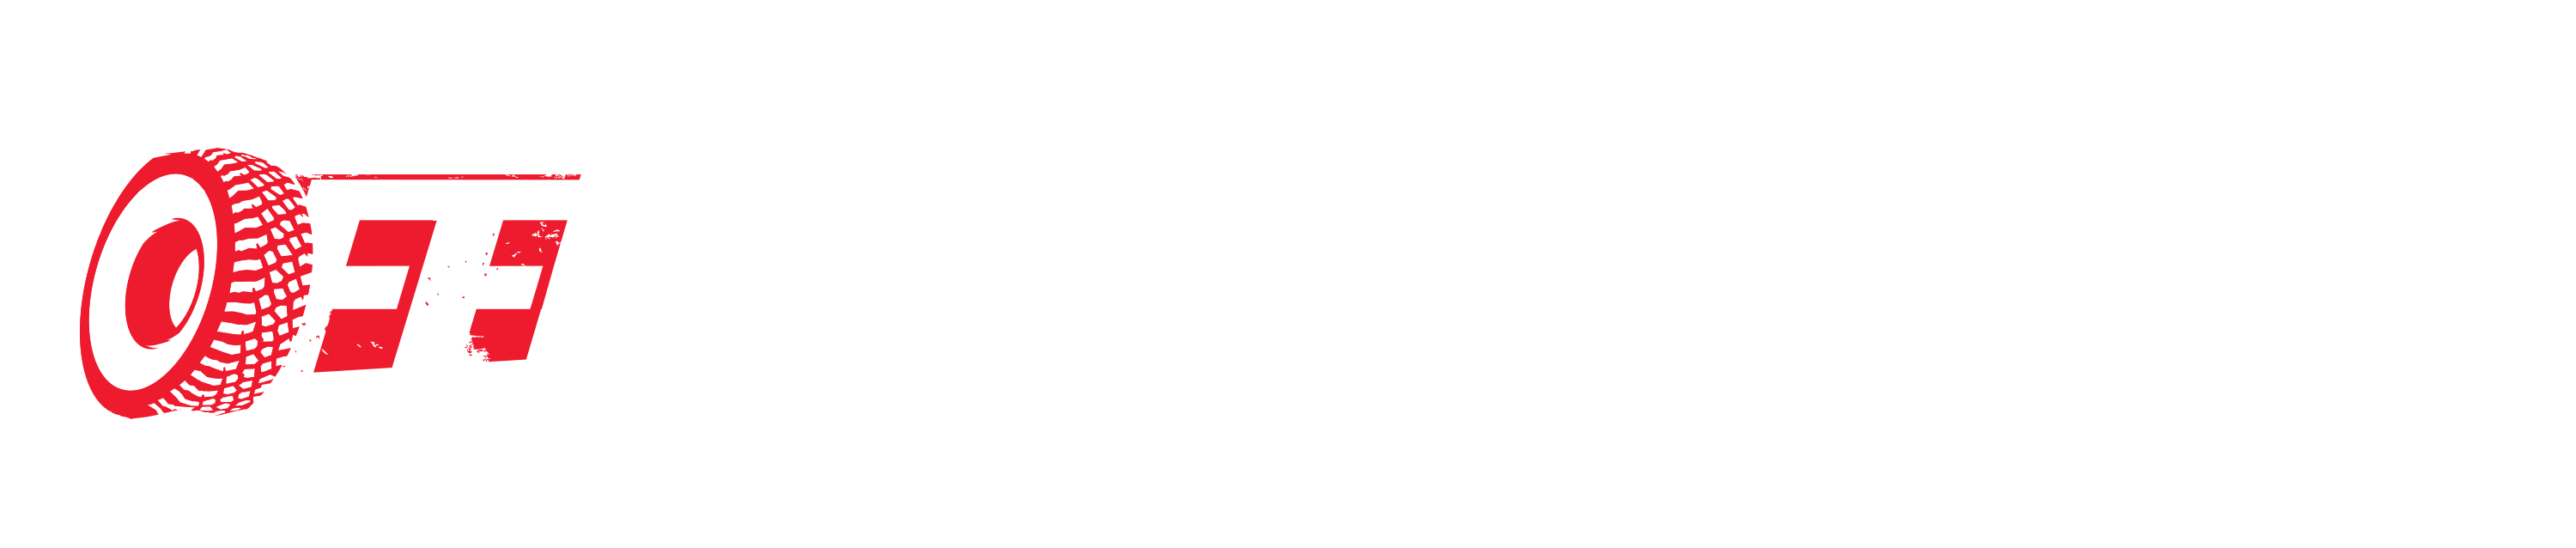 Motorsport Australia BFGoodrich Off Road Championship